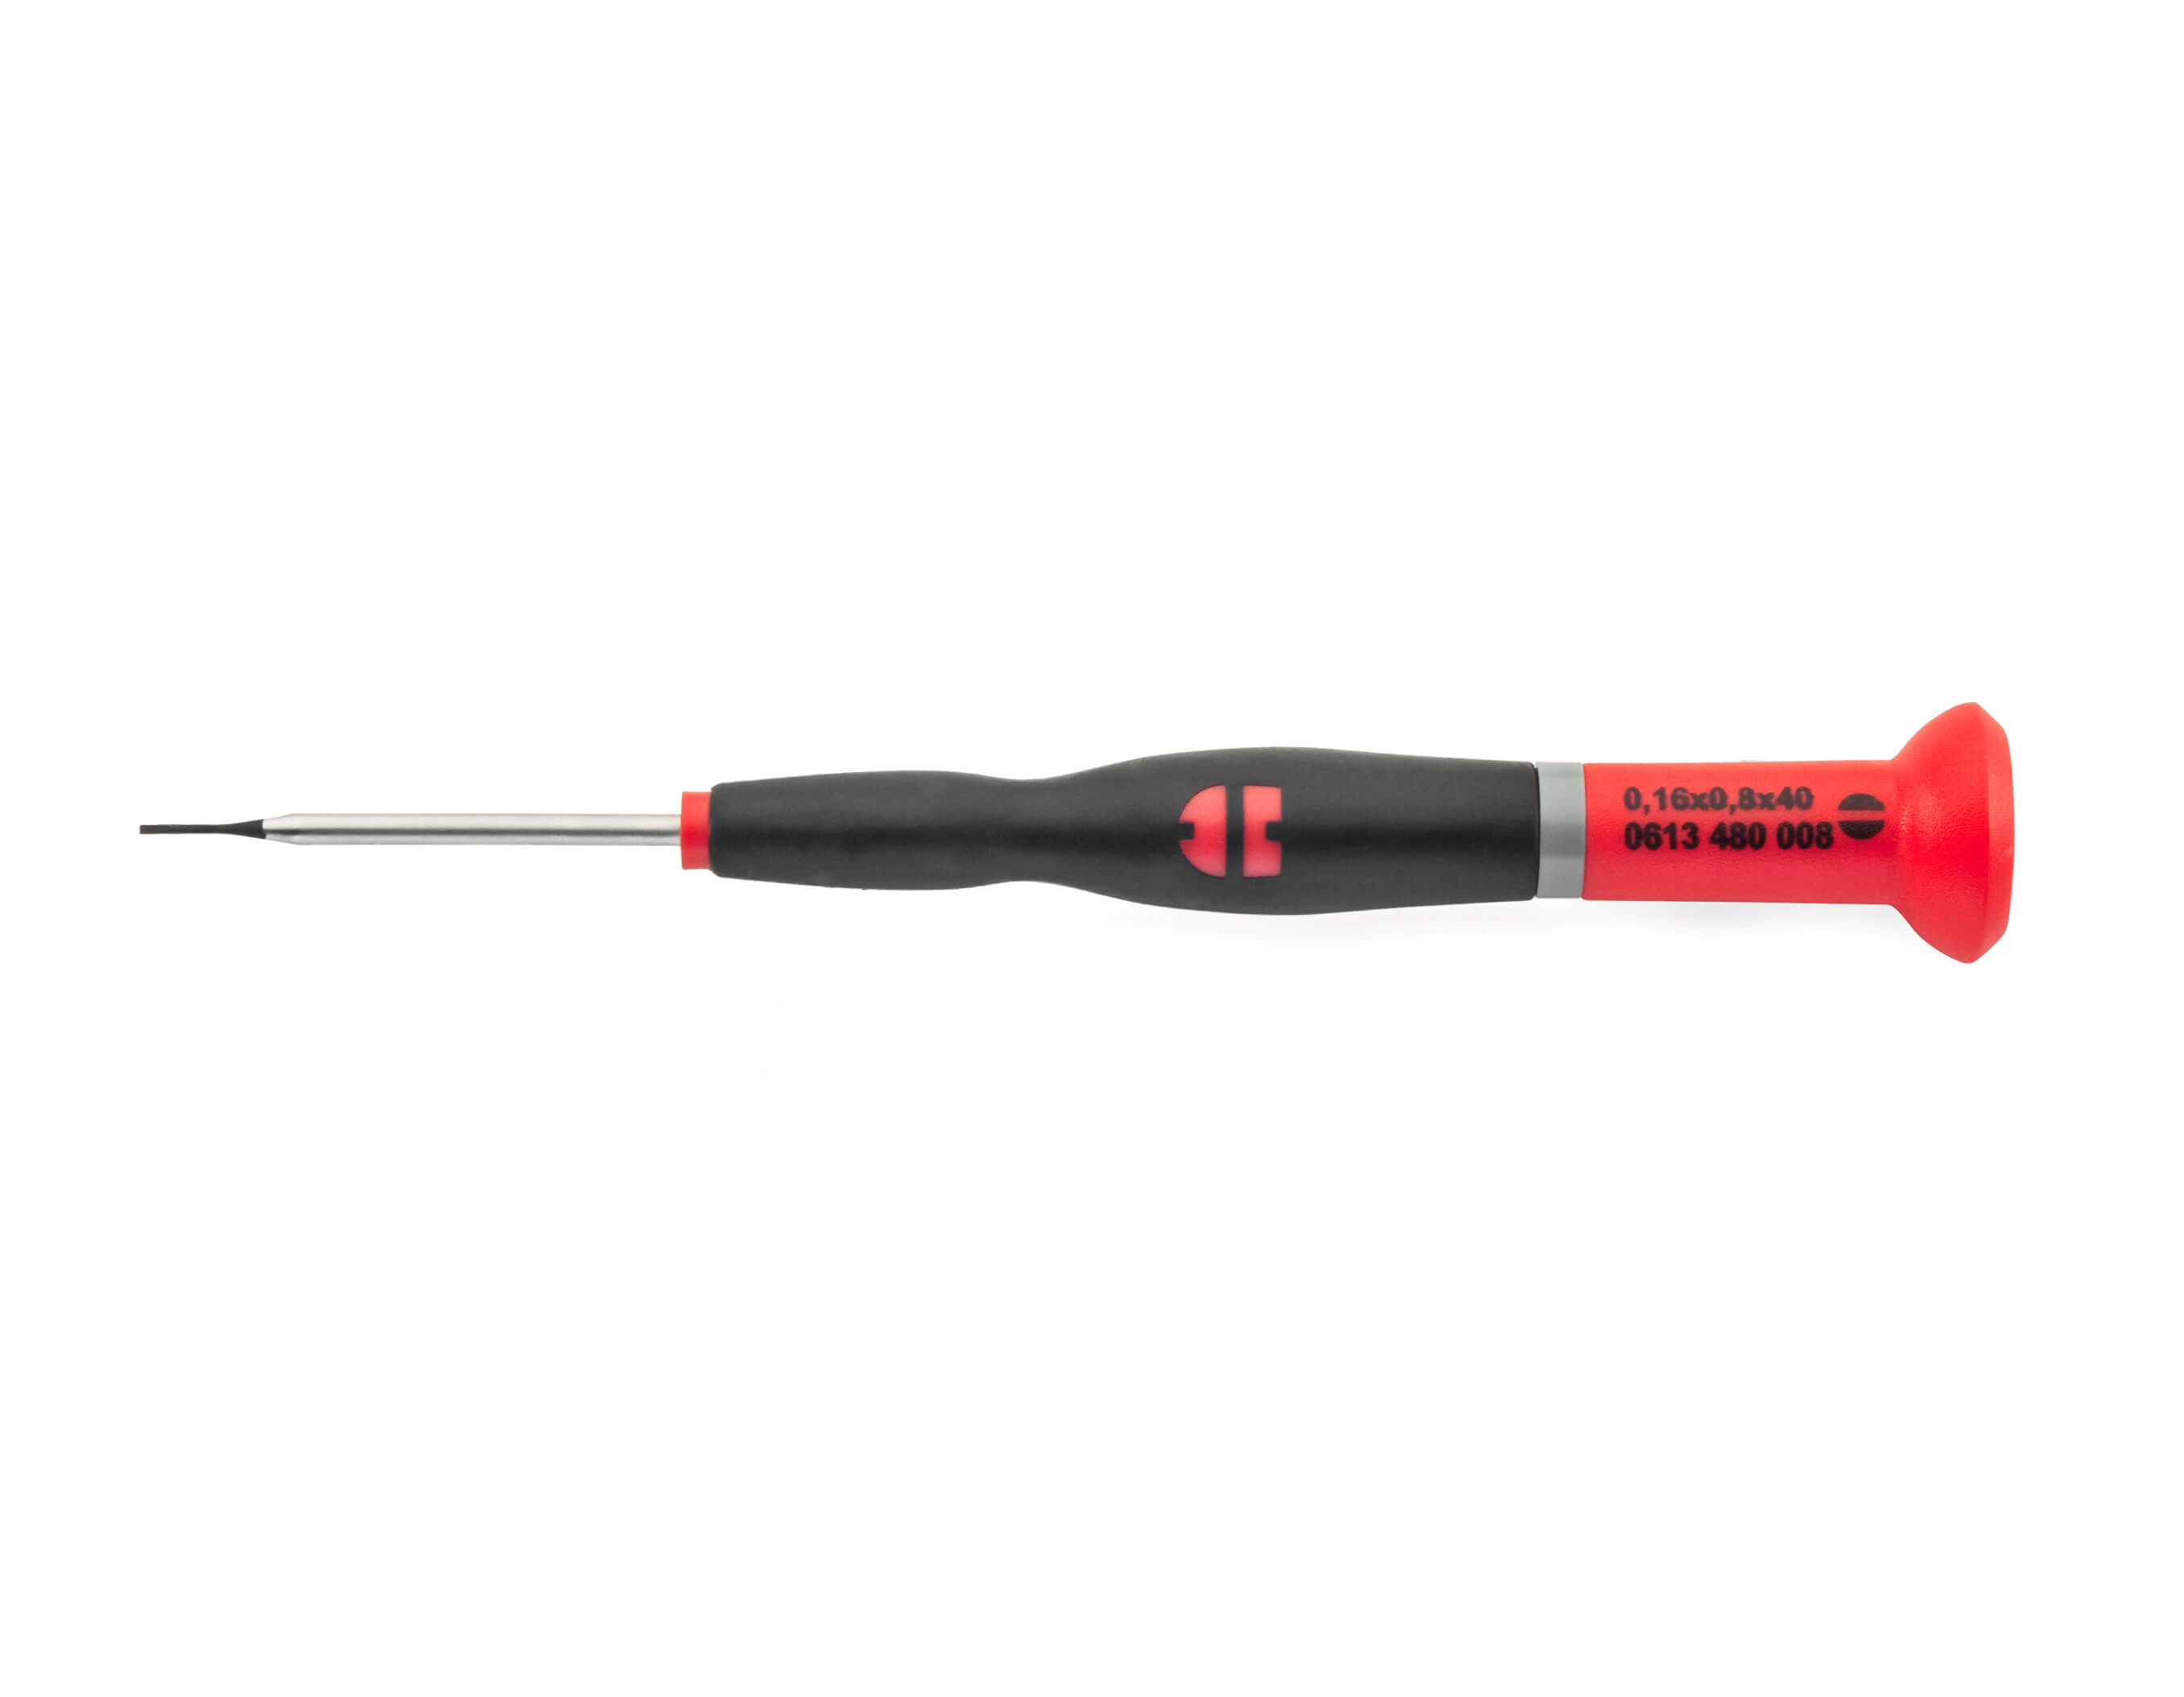 Precision screwdriver slt Blk tip 0.18X1.0X40 - OD